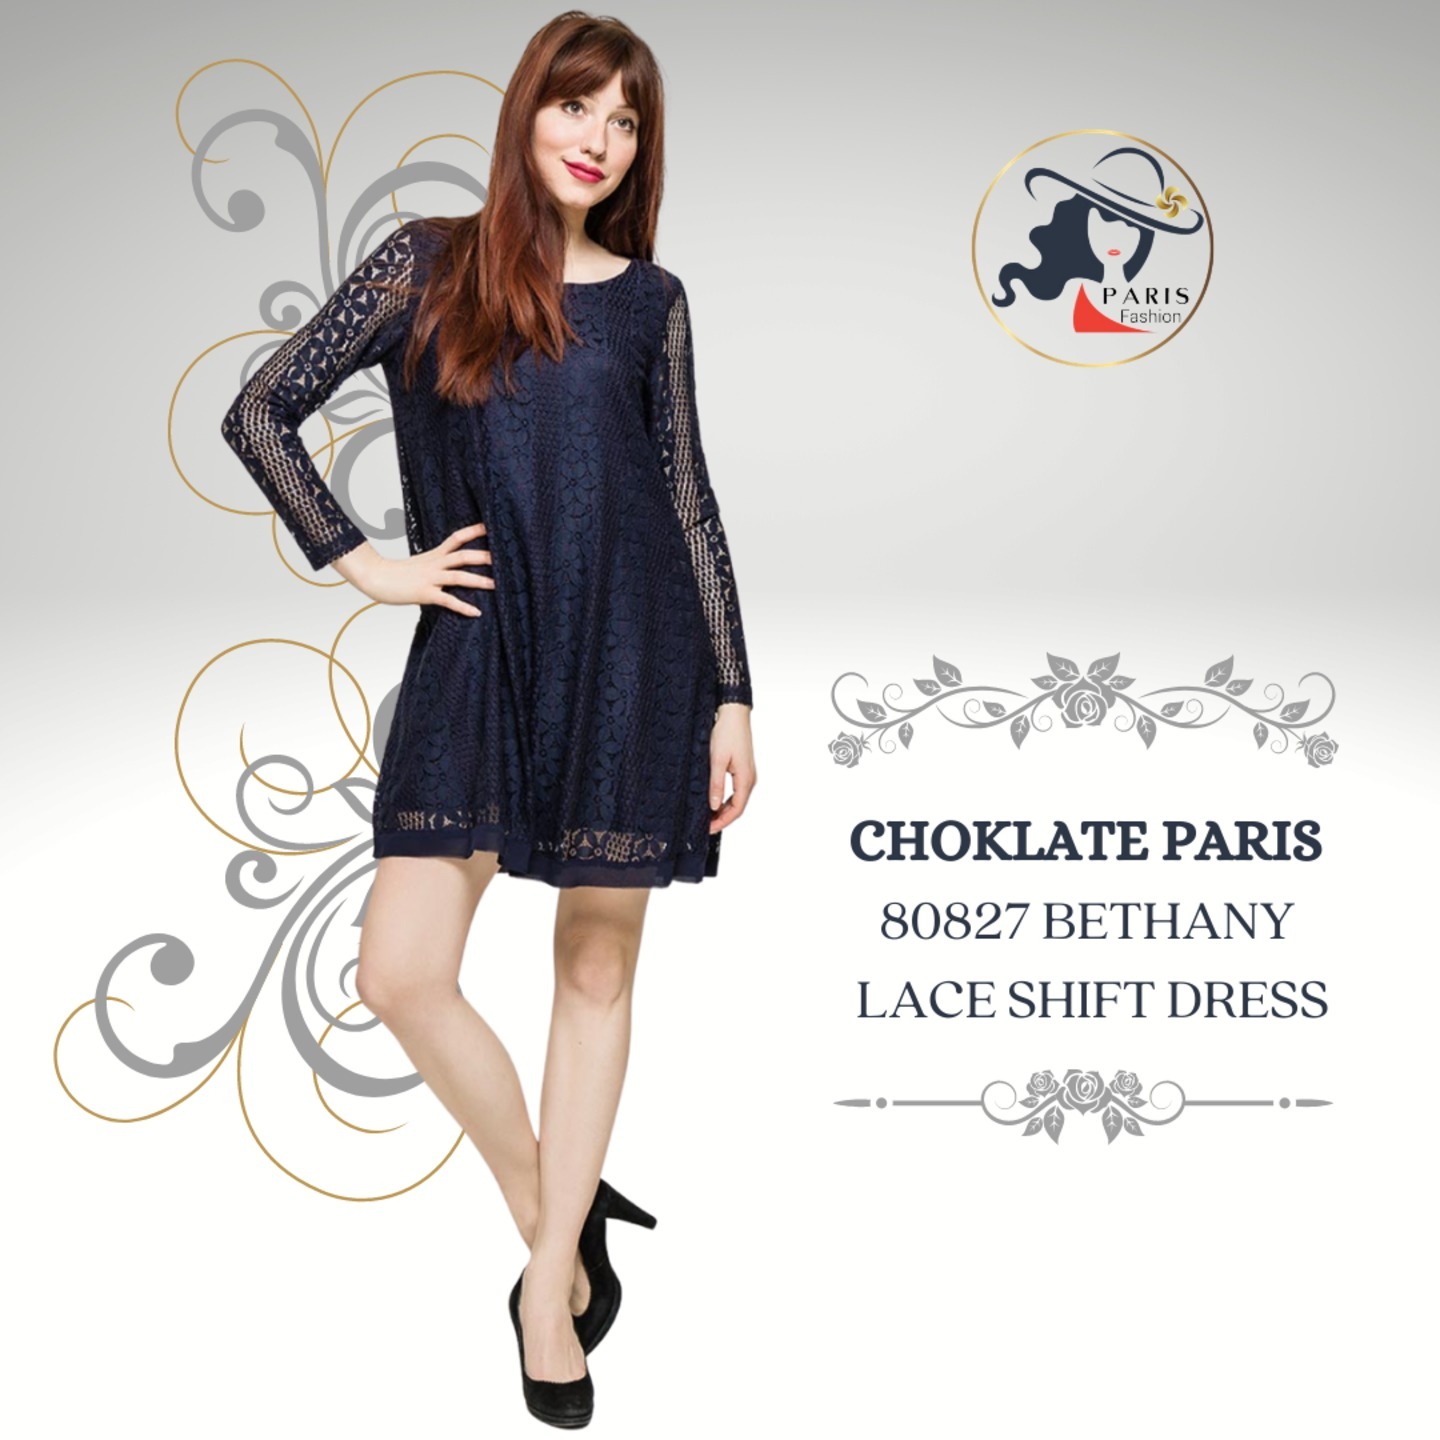 CHOKLATE PARIS 80827 BETHANY LACE SHIFT DRESS